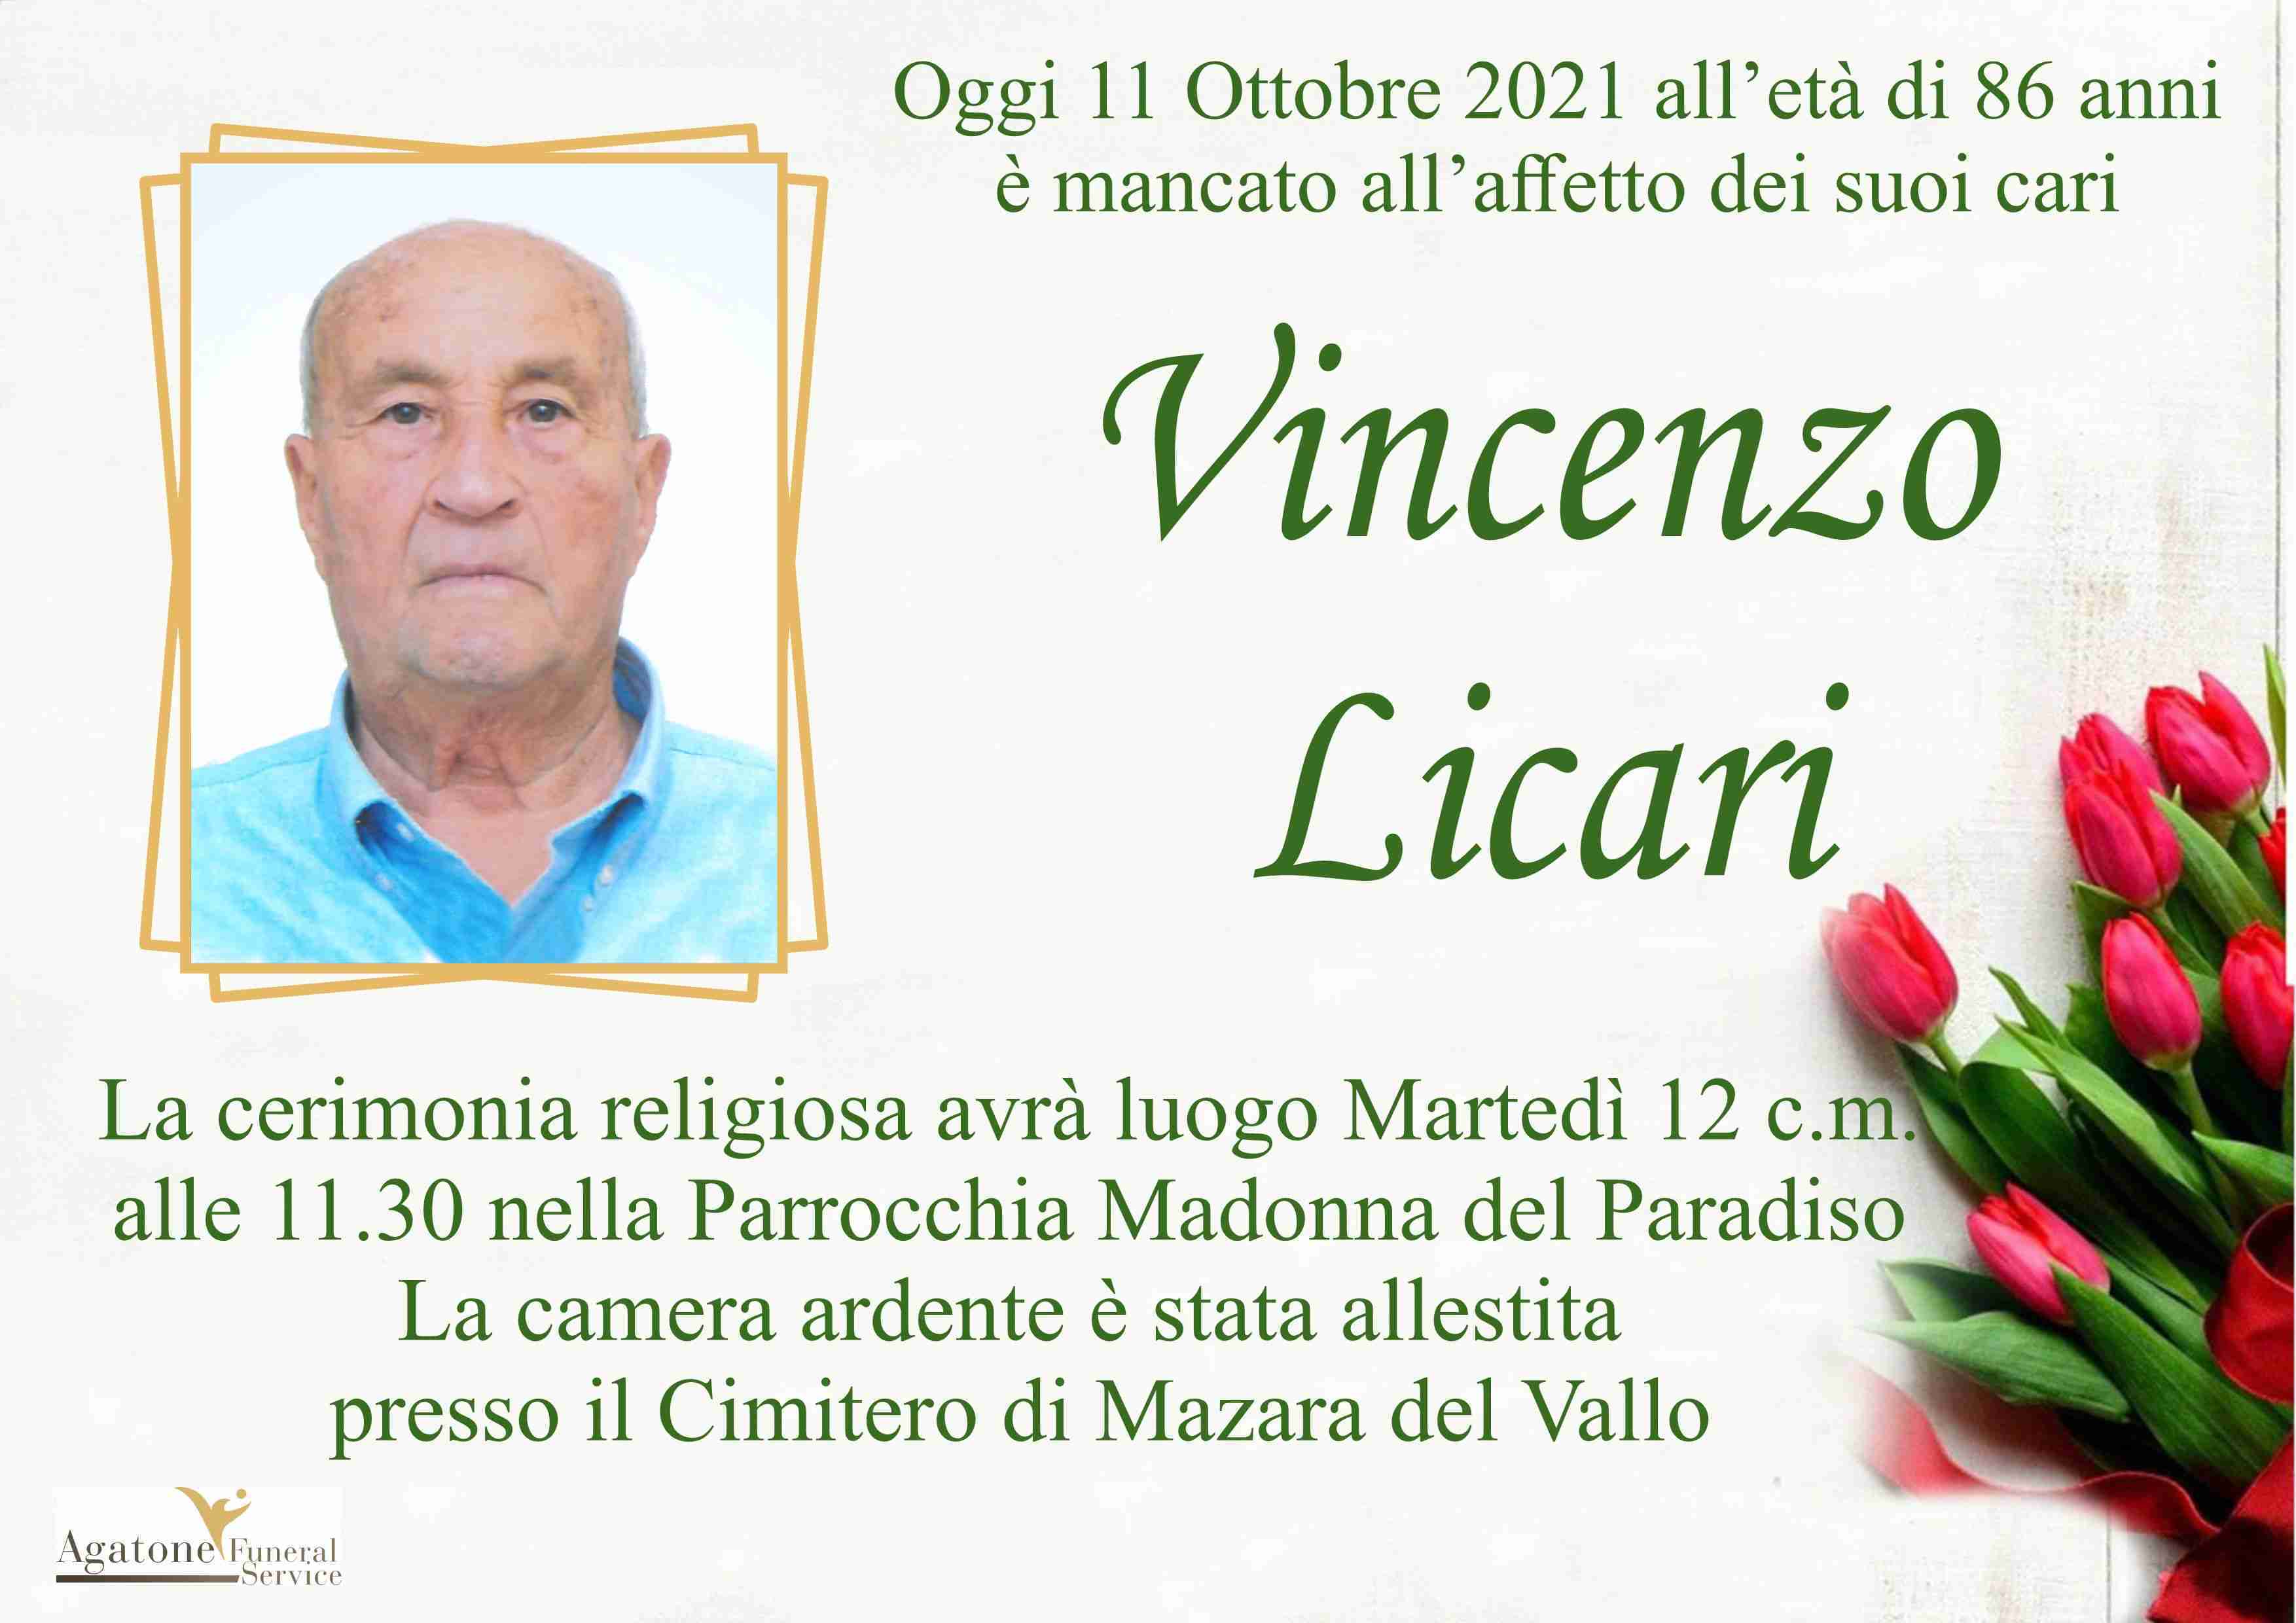 Vincenzo Licari